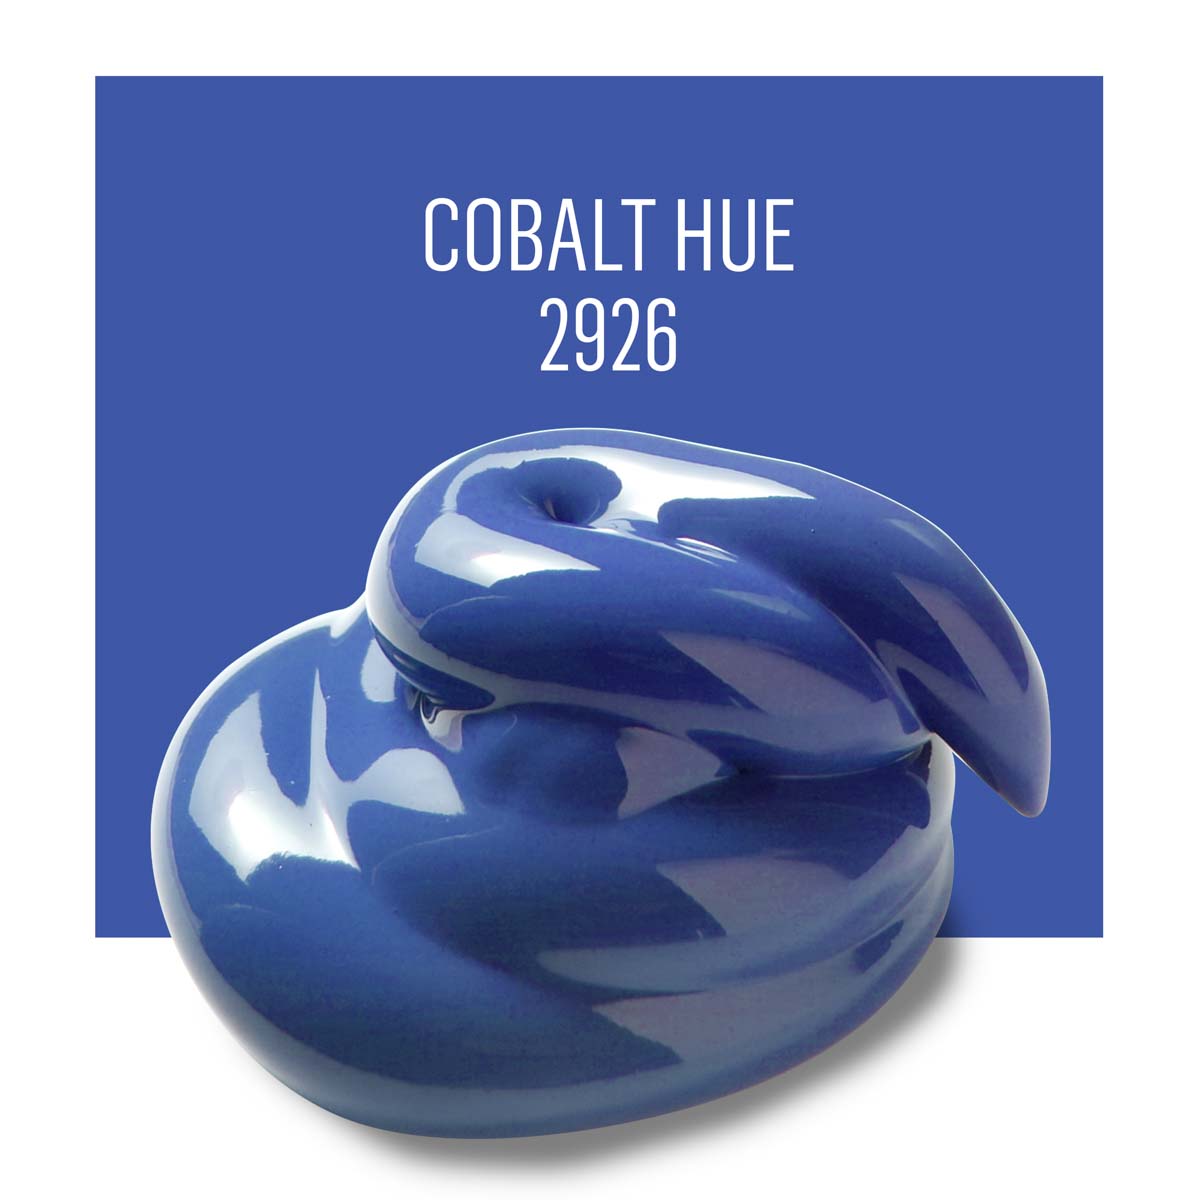 FolkArt ® Multi-Surface Satin Acrylic Paints - Cobalt Blue, 2 oz. - 2926